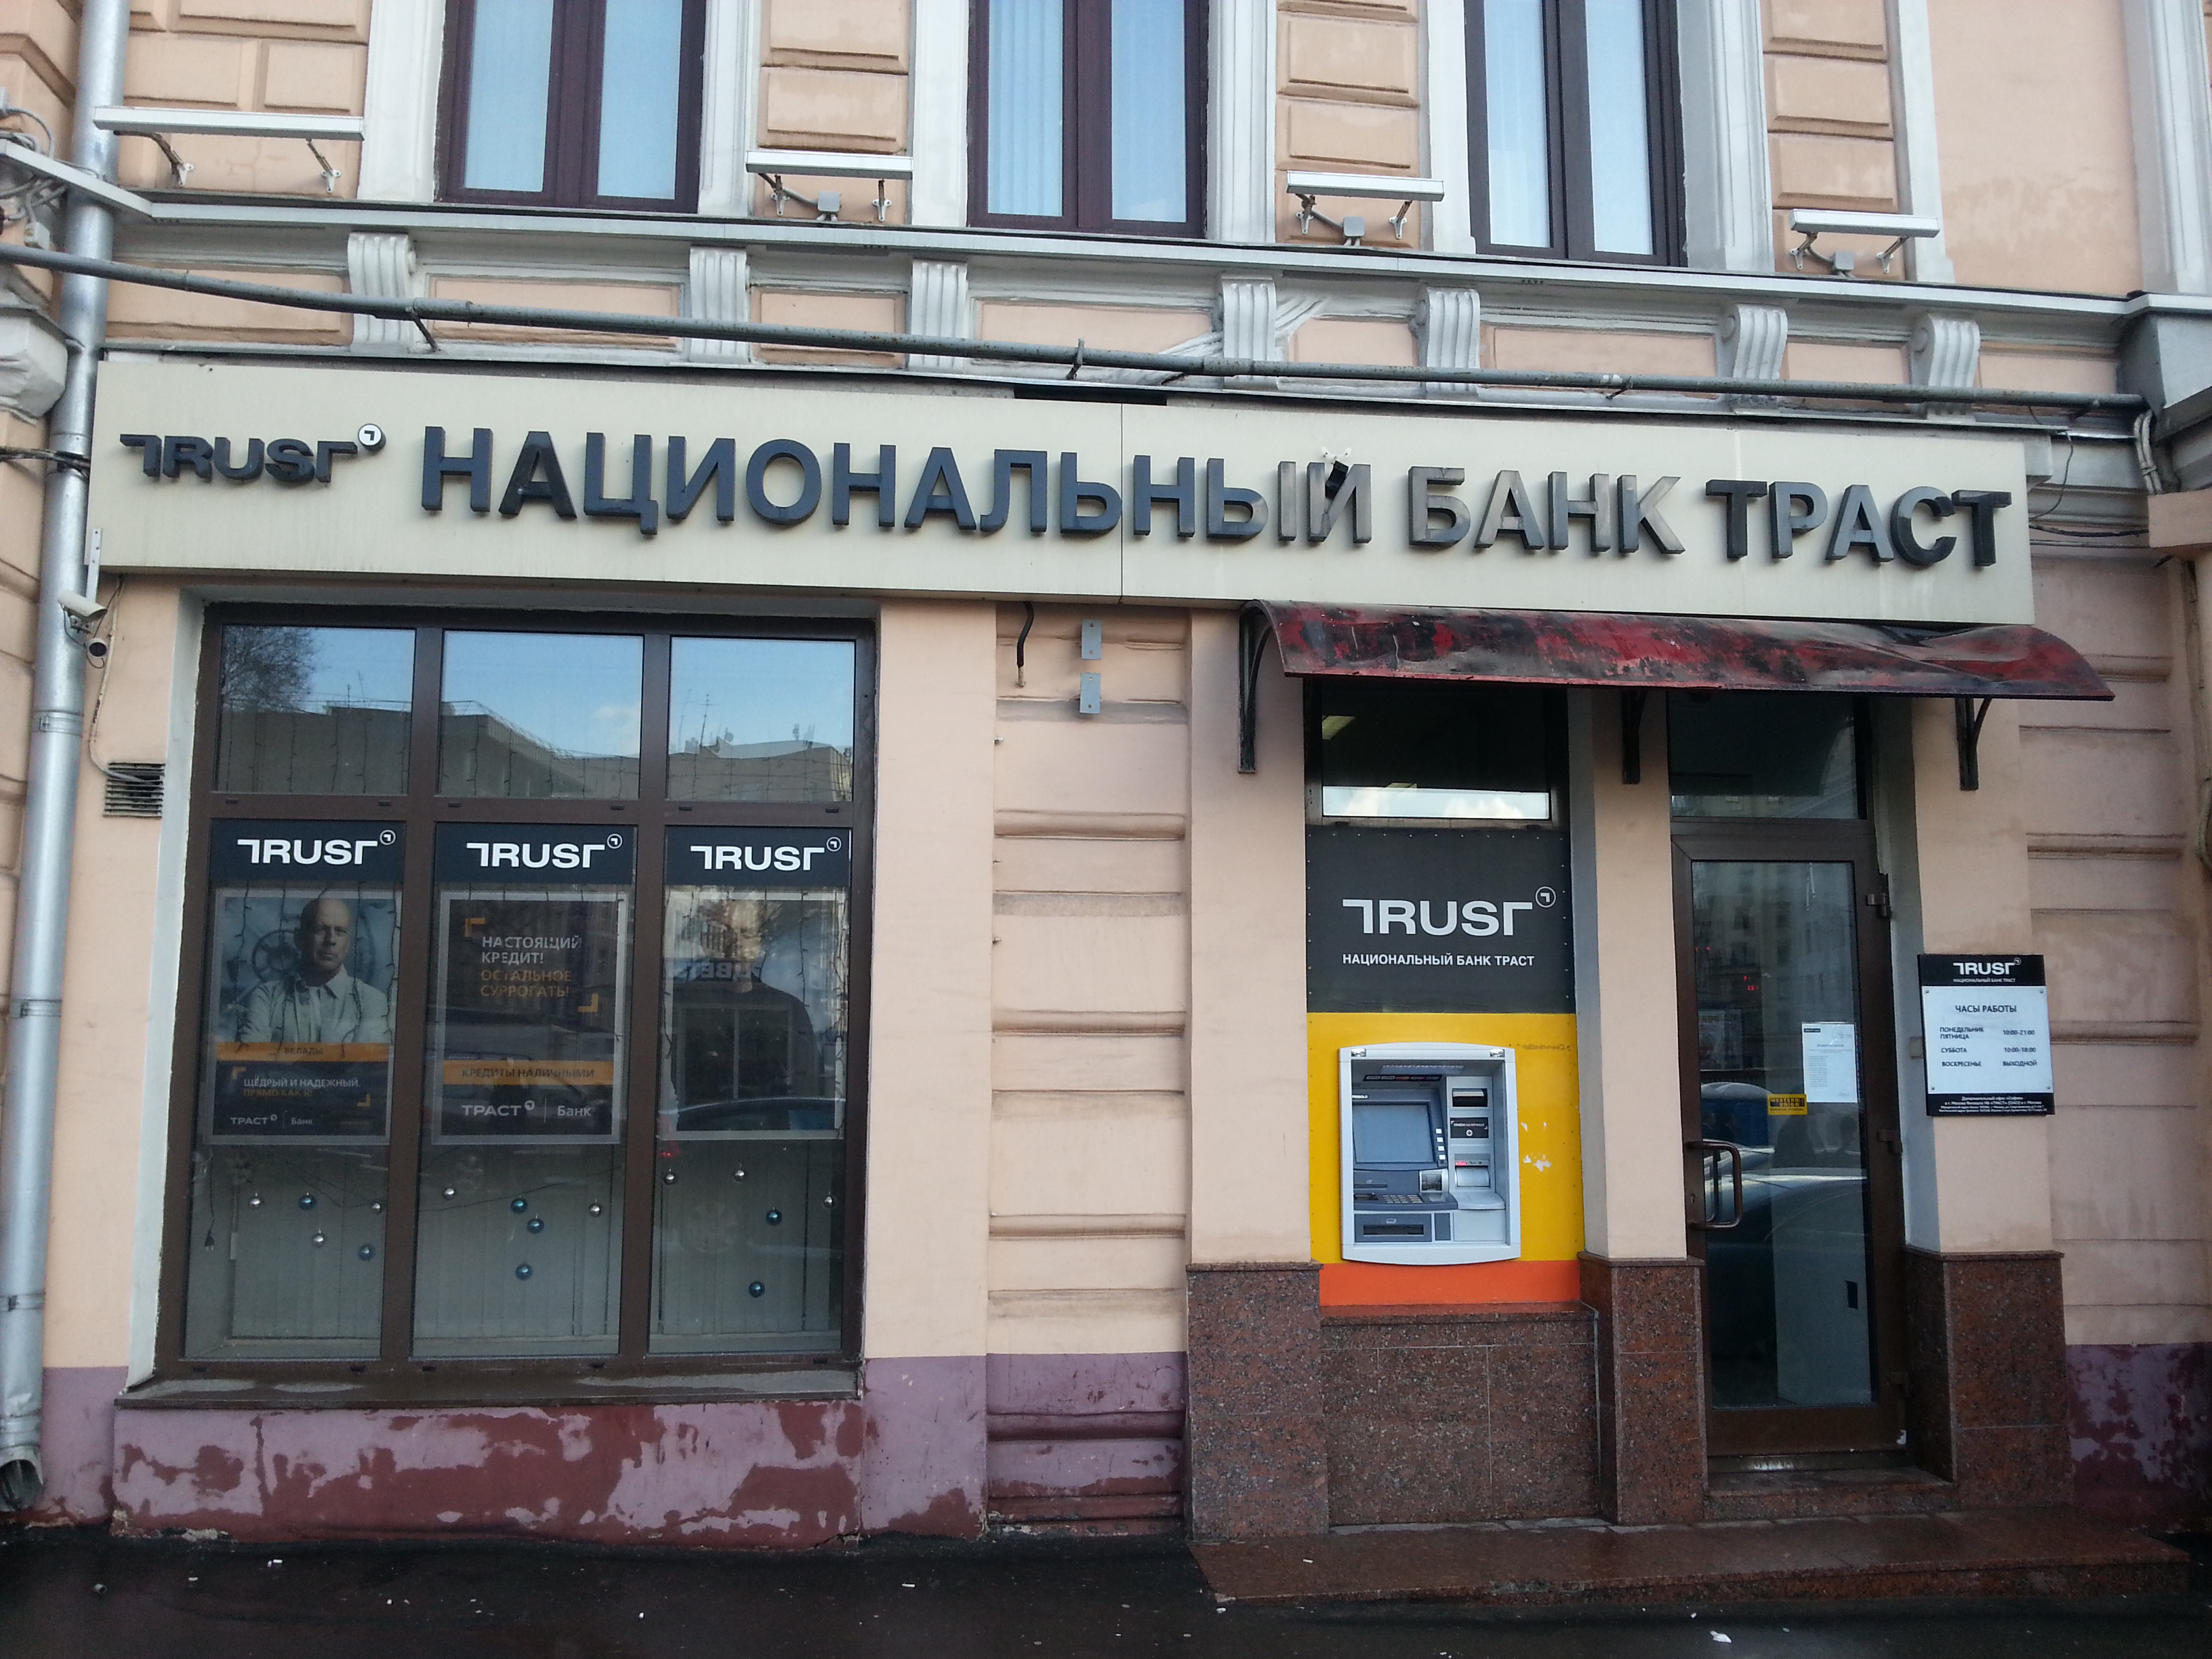 Национальный банк траст. Банк Траст Москва. Национальный банк в Москве. Банк национальный стандарт.